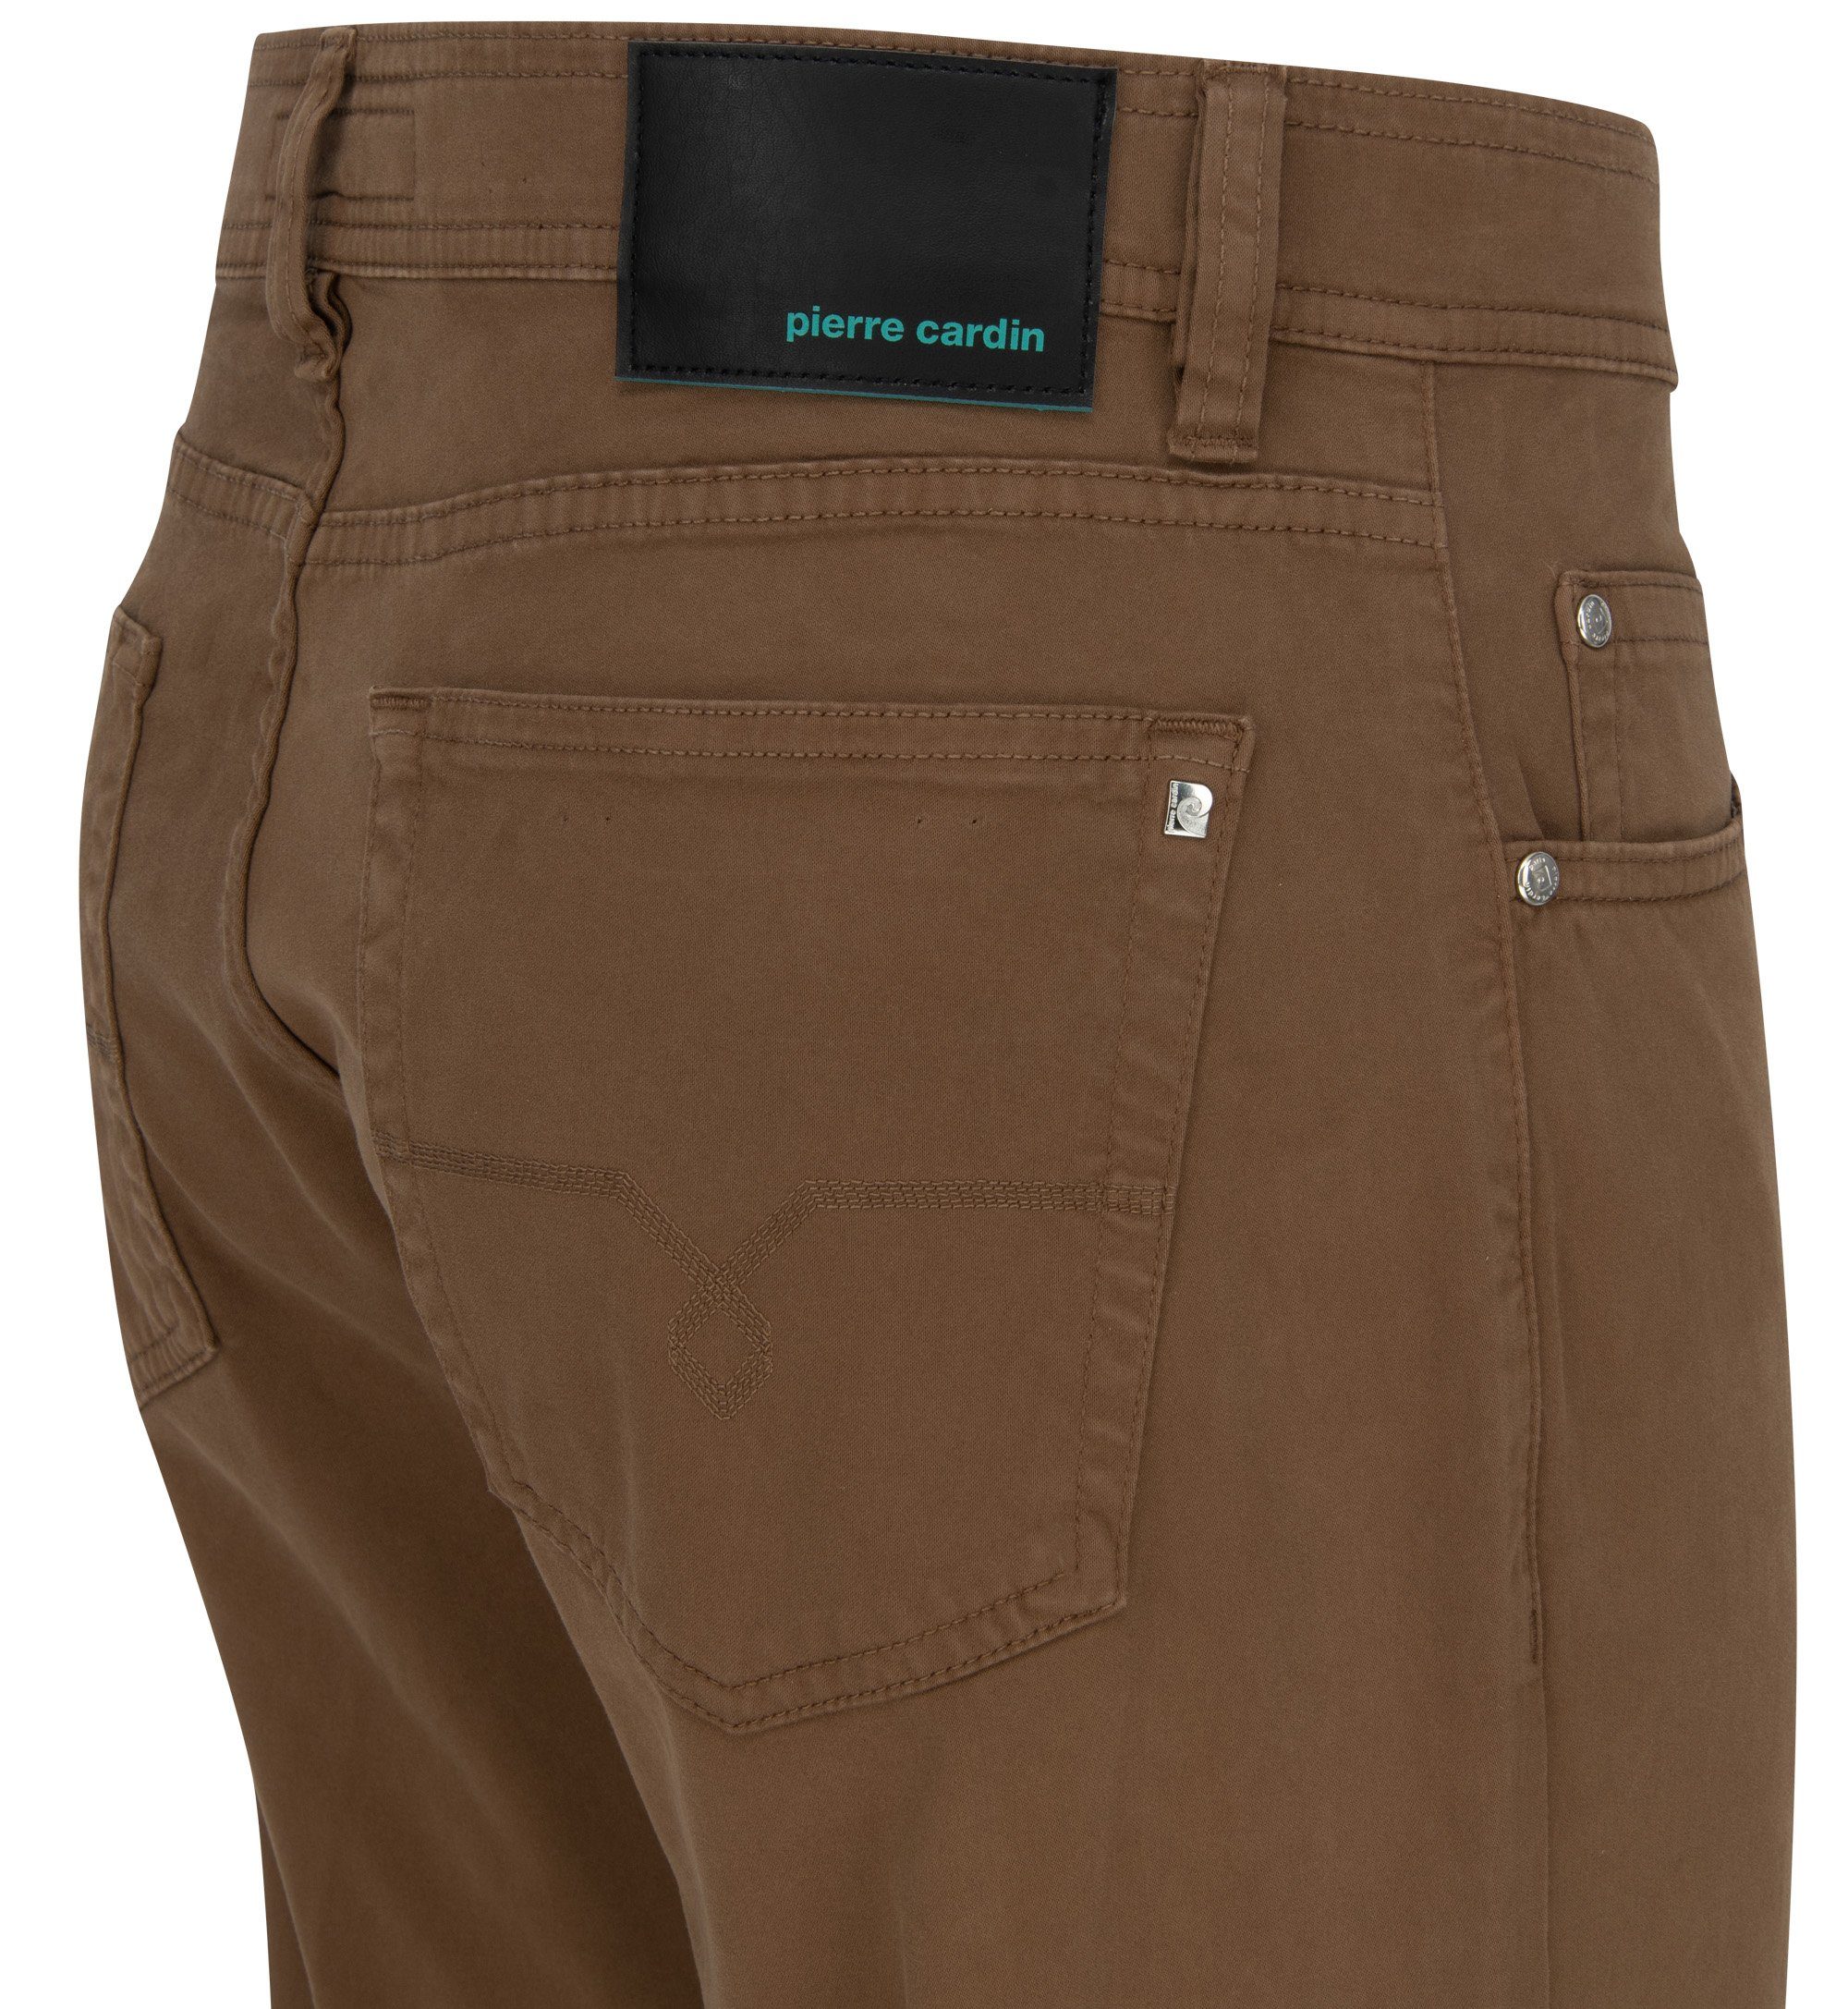 Pierre Cardin 5-Pocket-Jeans PIERRE CARDIN DEAUVILLE brownish 31961 2500.70  - Performance Plus